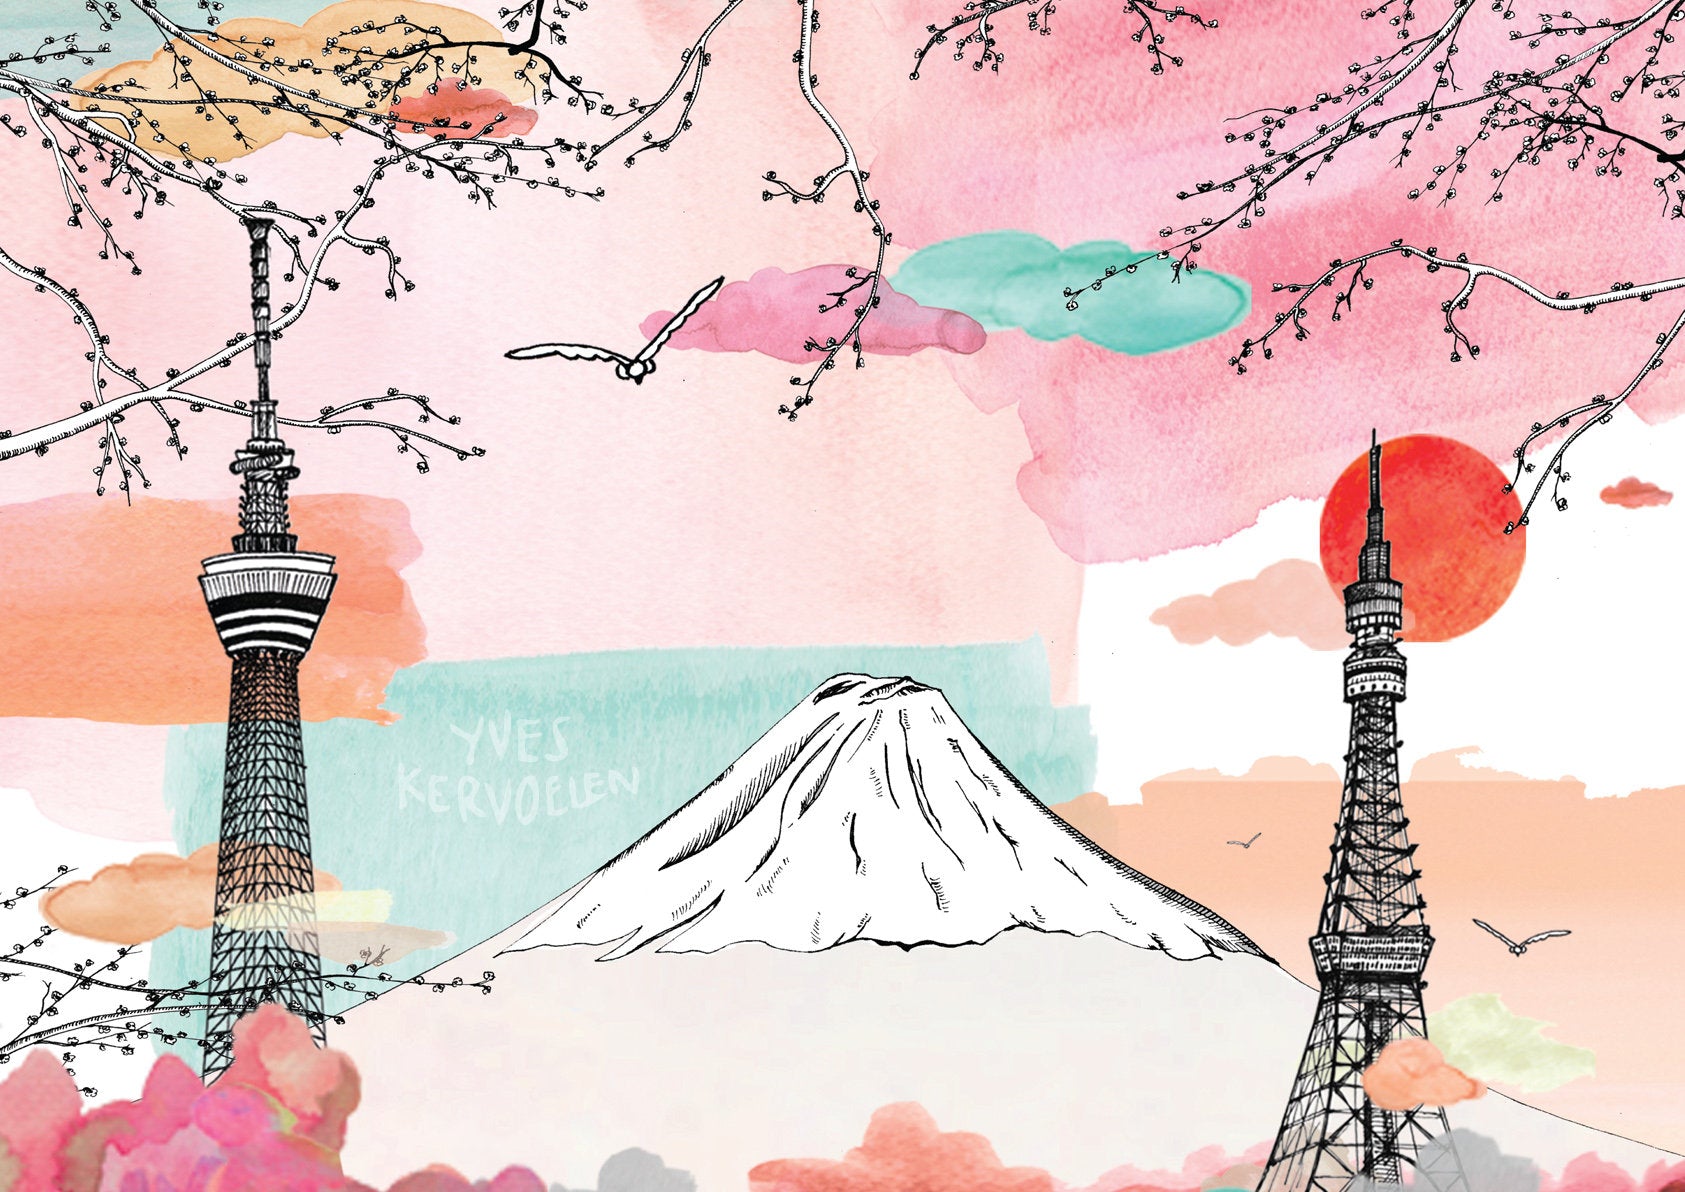 Fujiyama, Tokyo Tower, Tokyo Skytree - Tokyo - Japan // A4 - A3 // Poster, Architecture, Art.